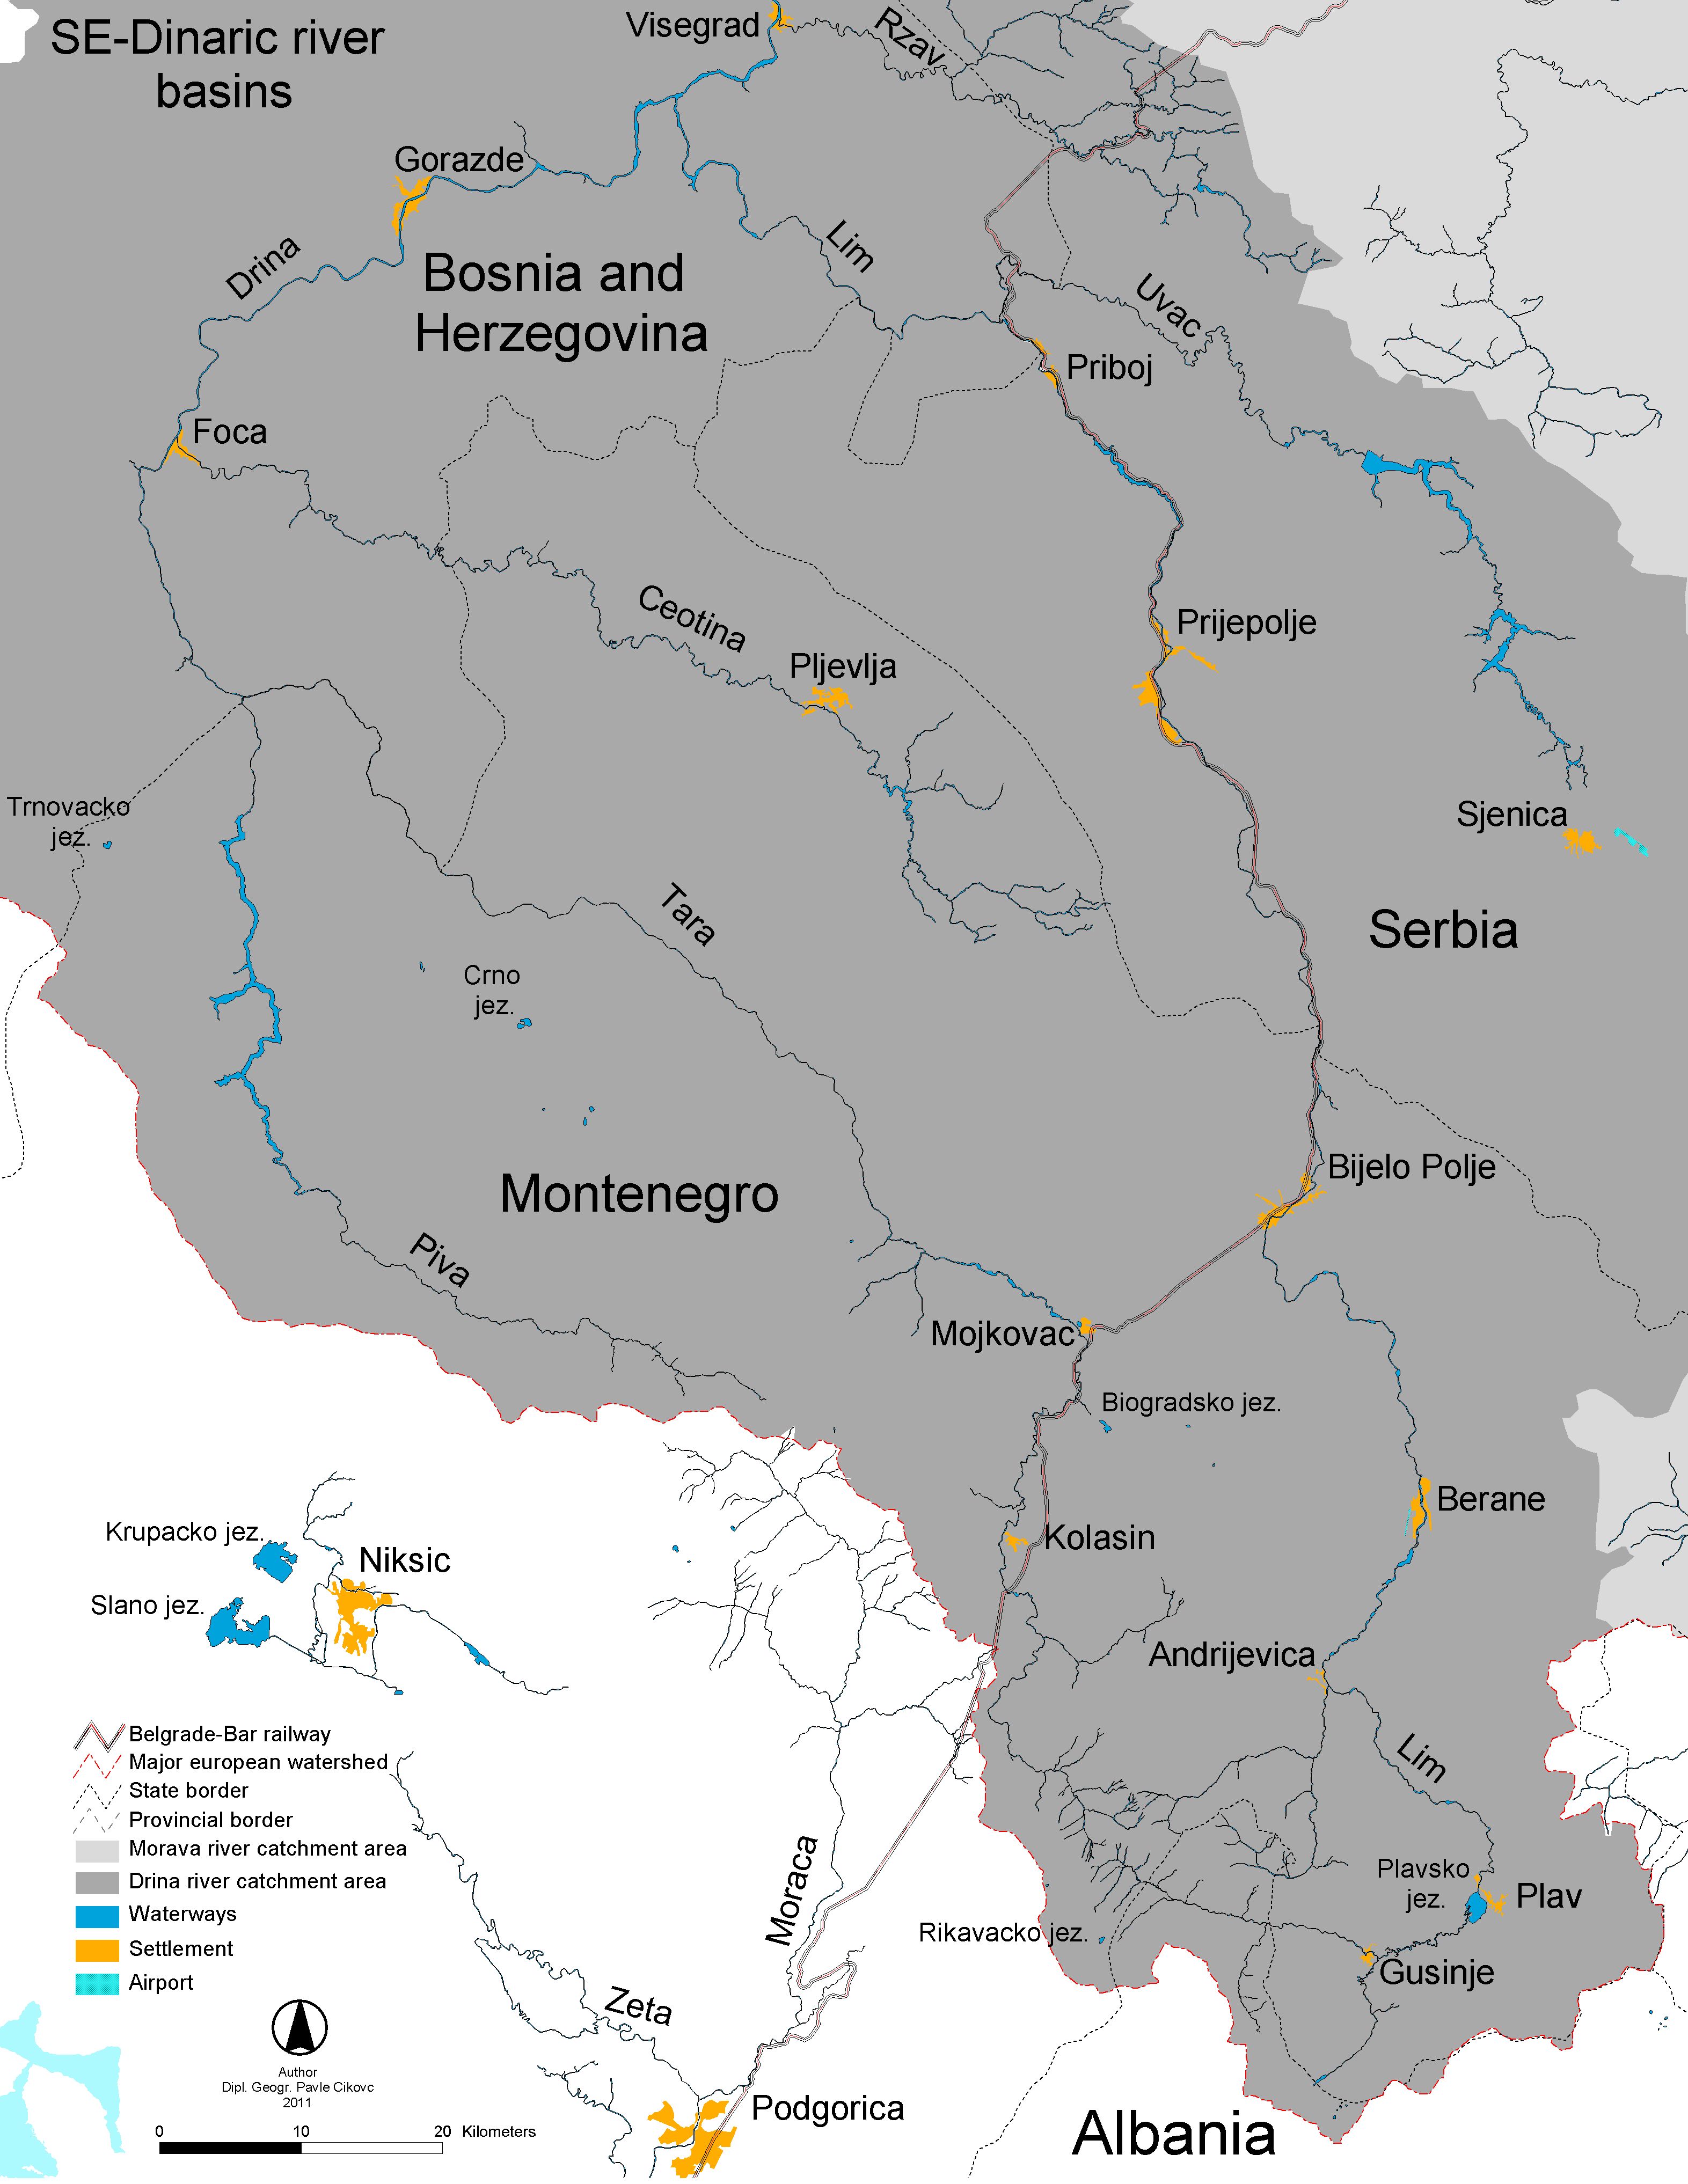 Se-dinaric river basins cikovac